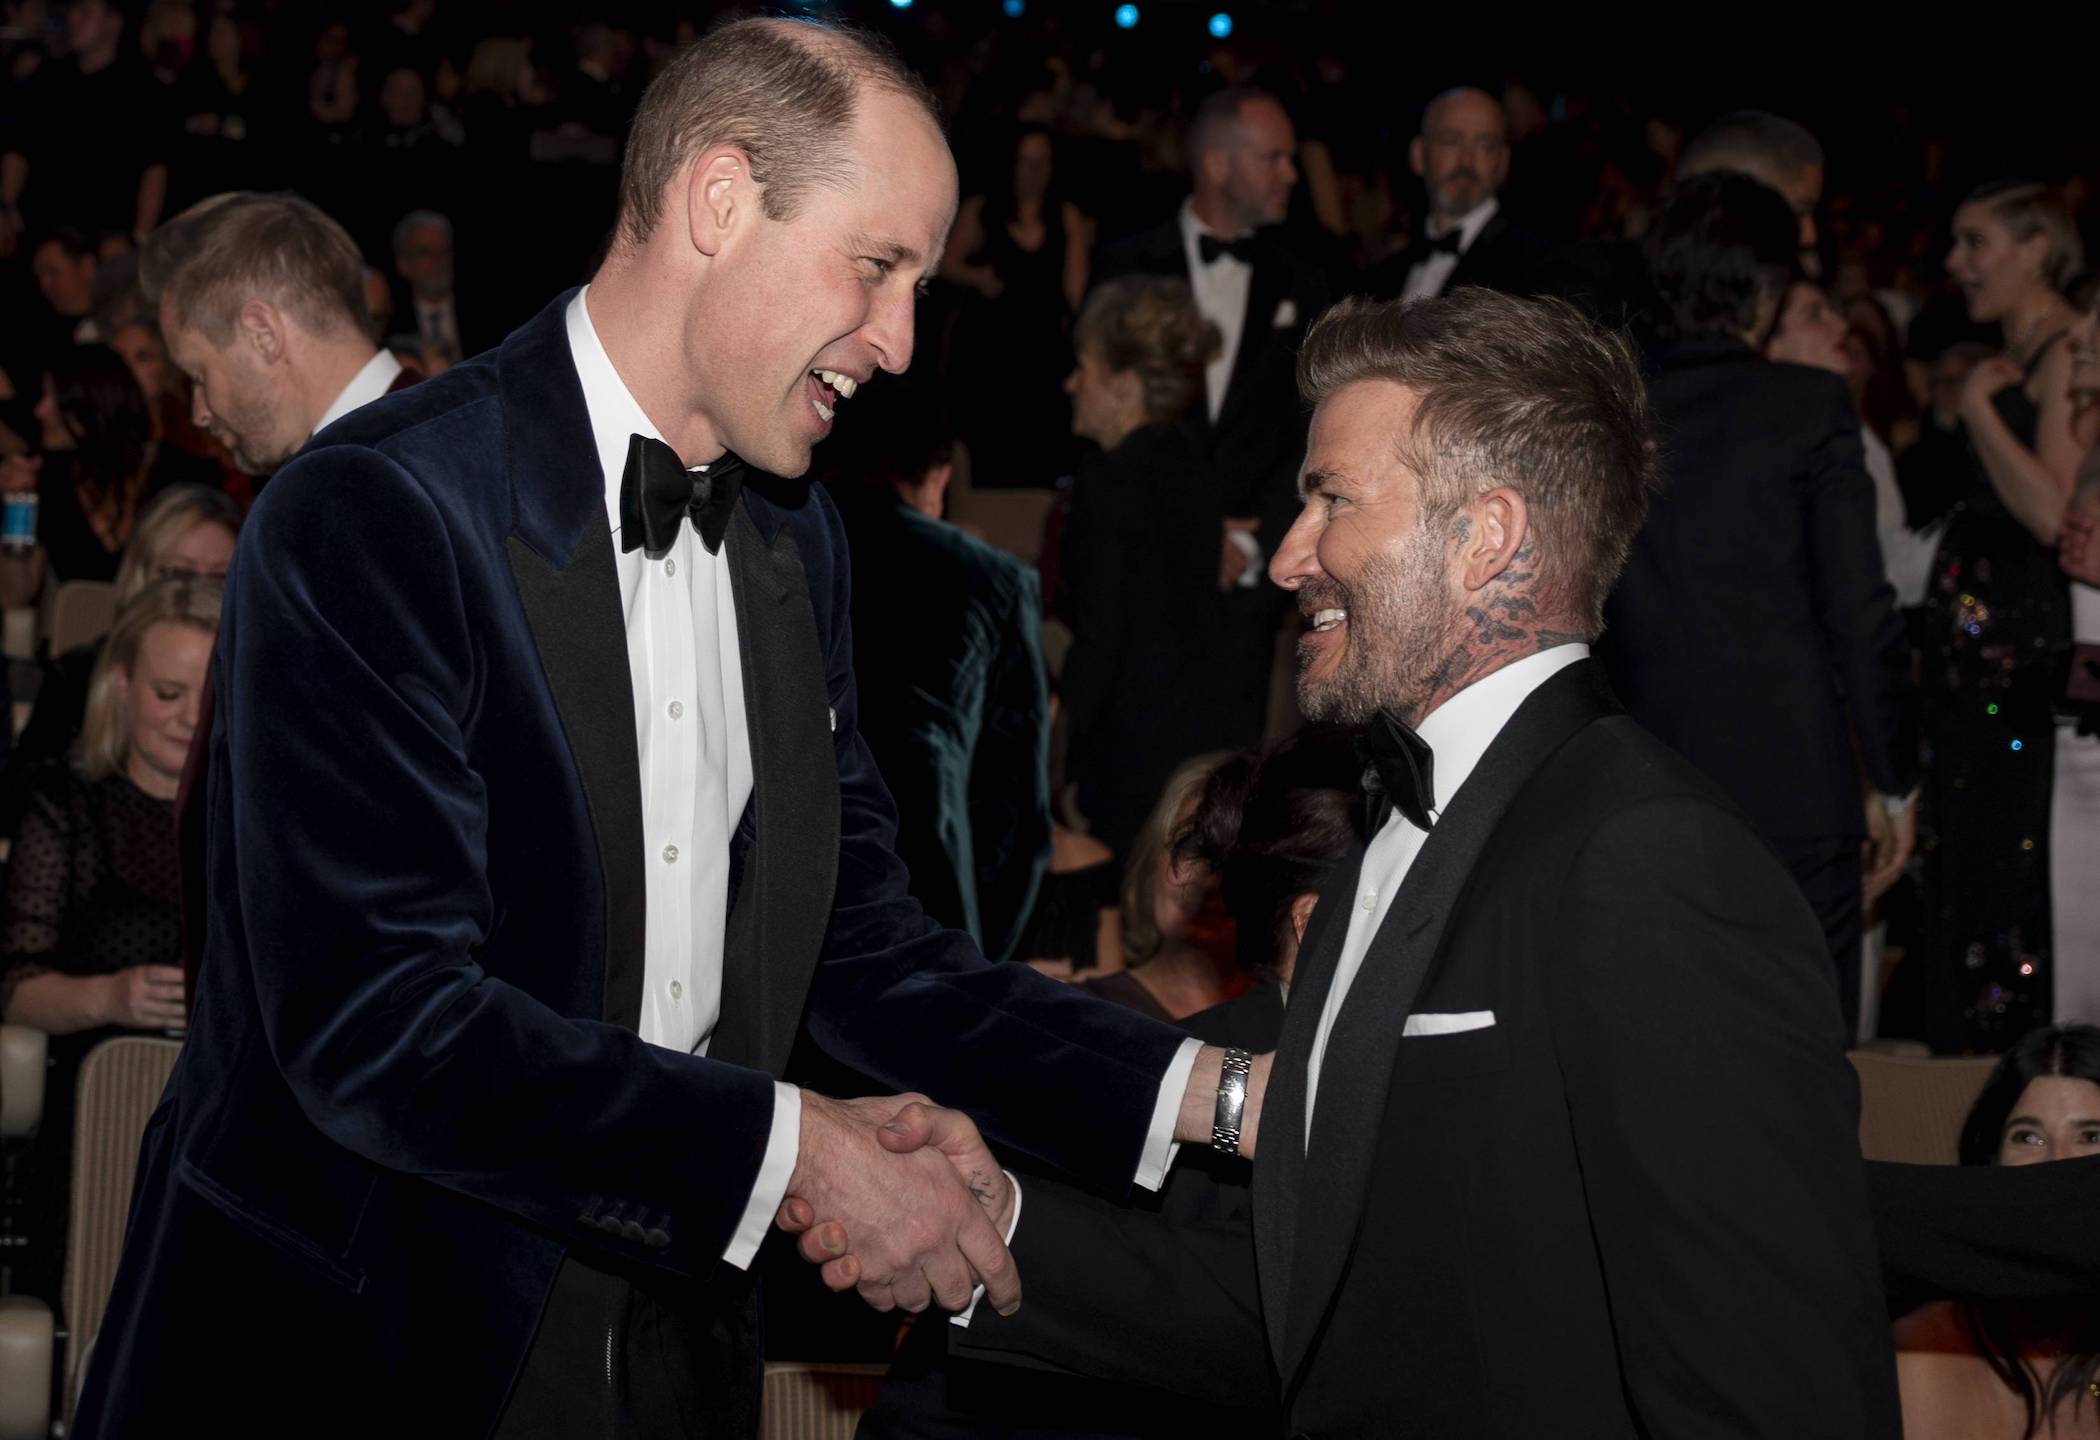 Prince William Attends The Bafta Film Awards